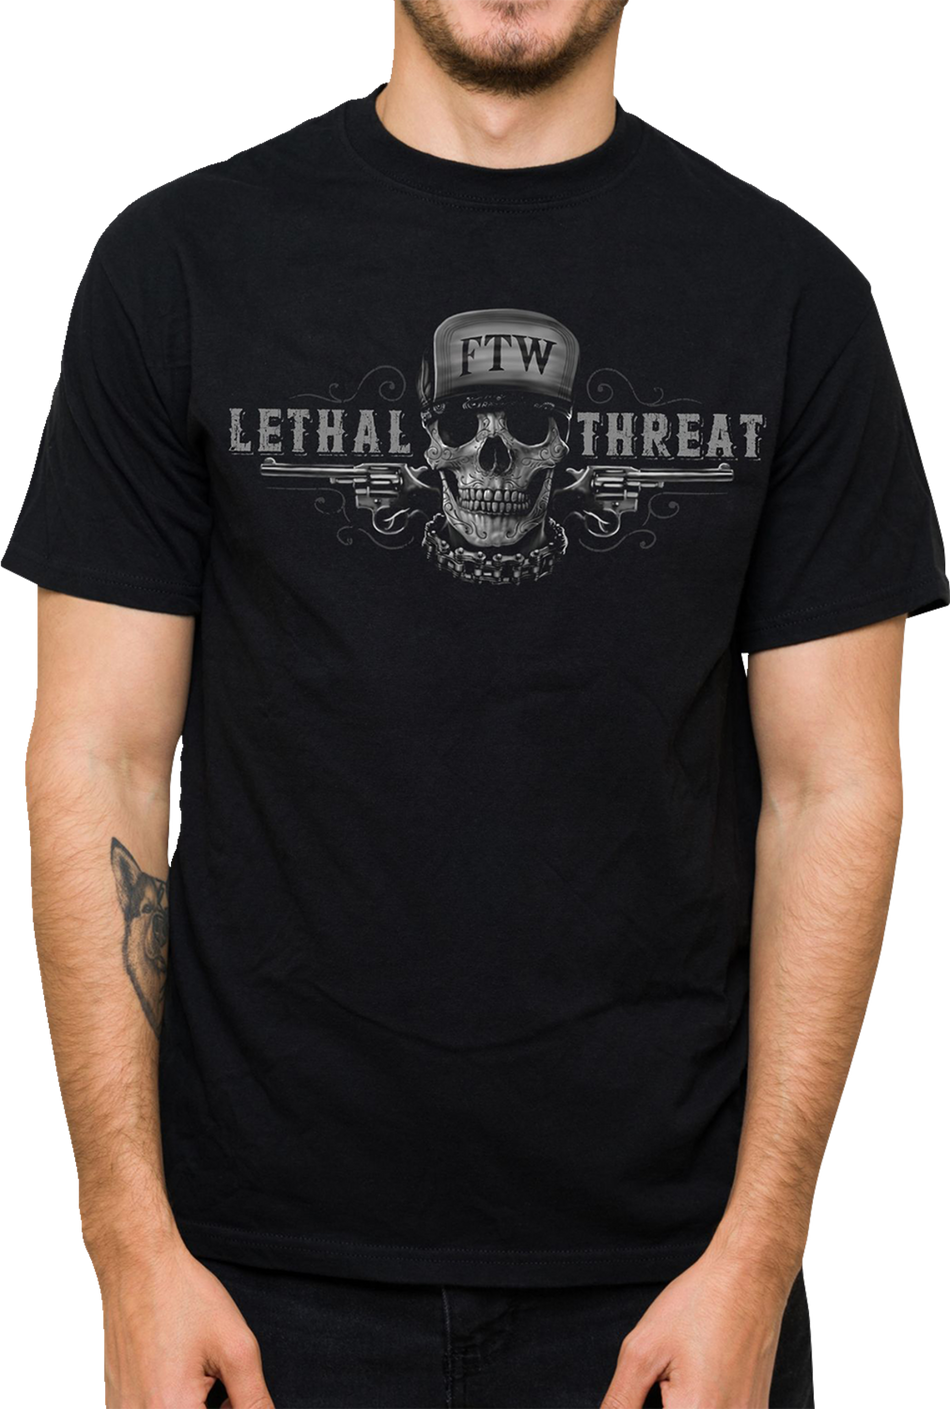 LETHAL THREAT Friend or Foe T-Shirt - Black - Large LT20904L